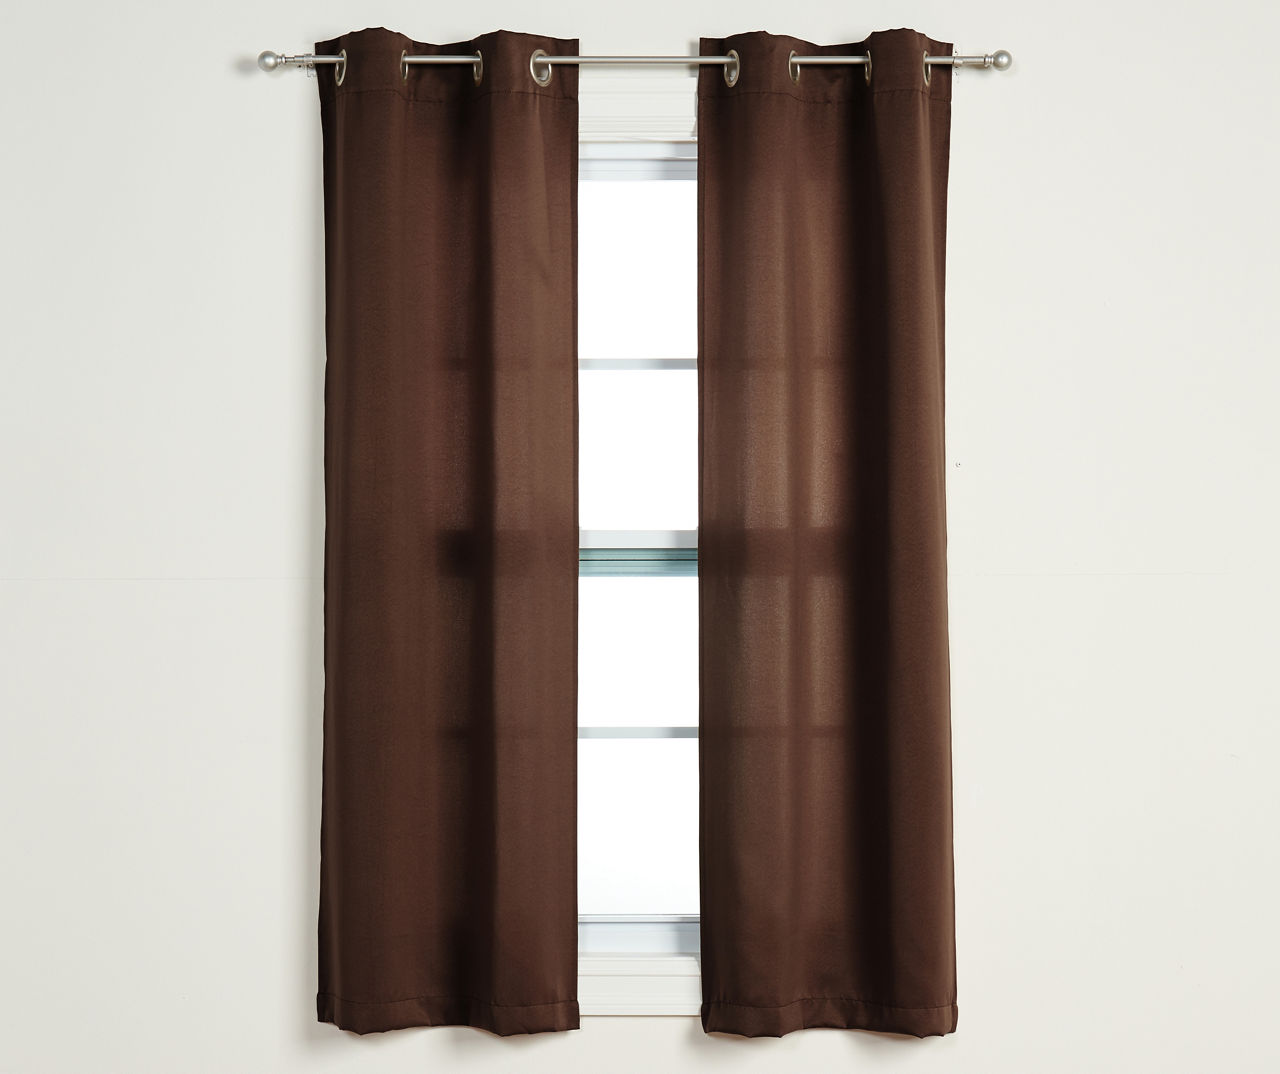 4-Piece Putnam Chocolate Room-Darkening Curtain Panels Set, (63")